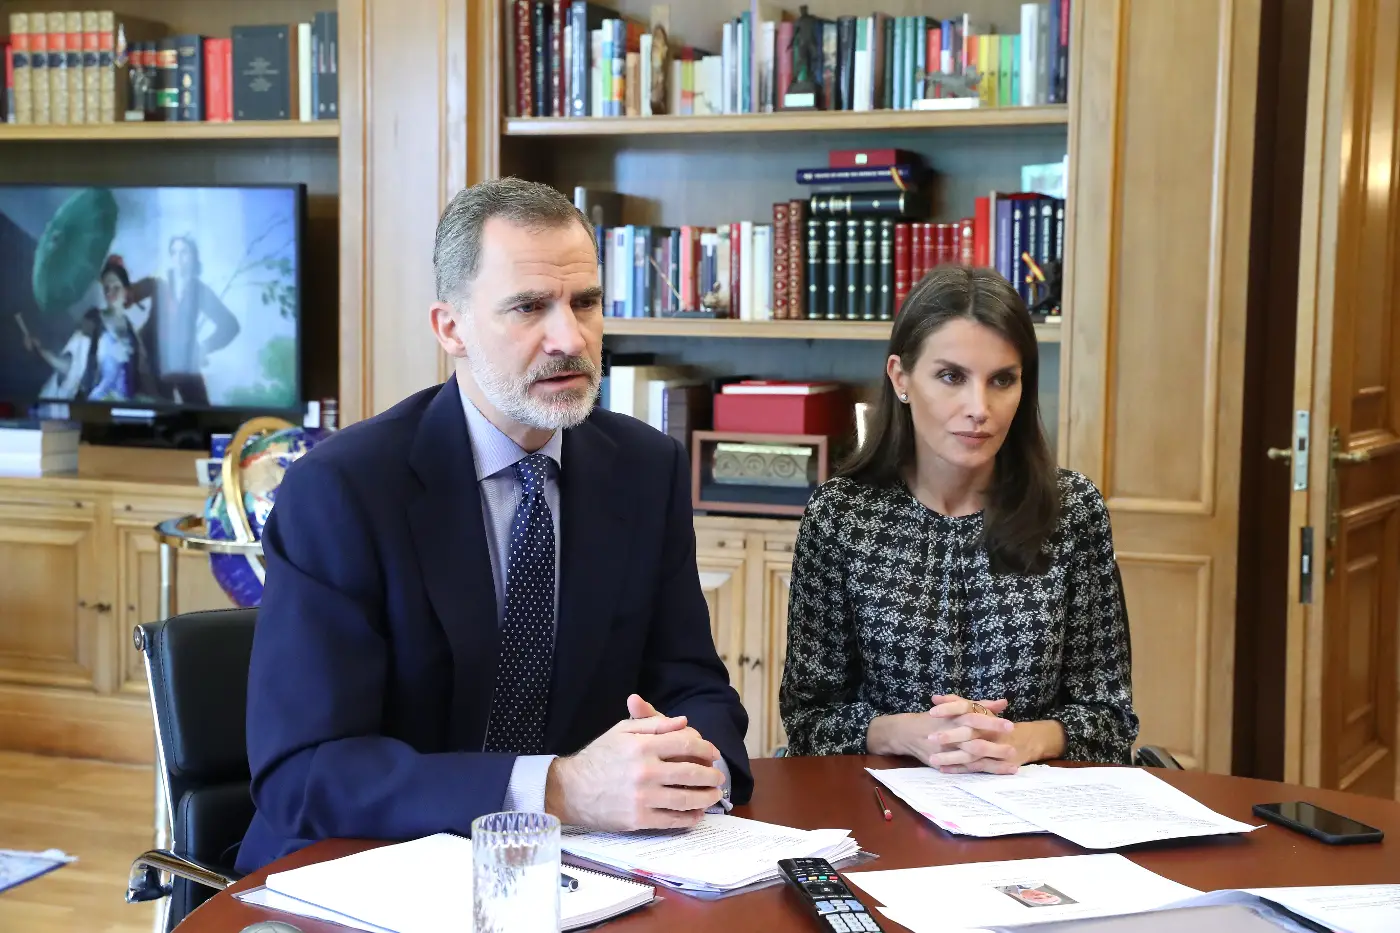 Felipe and Letizia talked to the Spanish Tourism Council